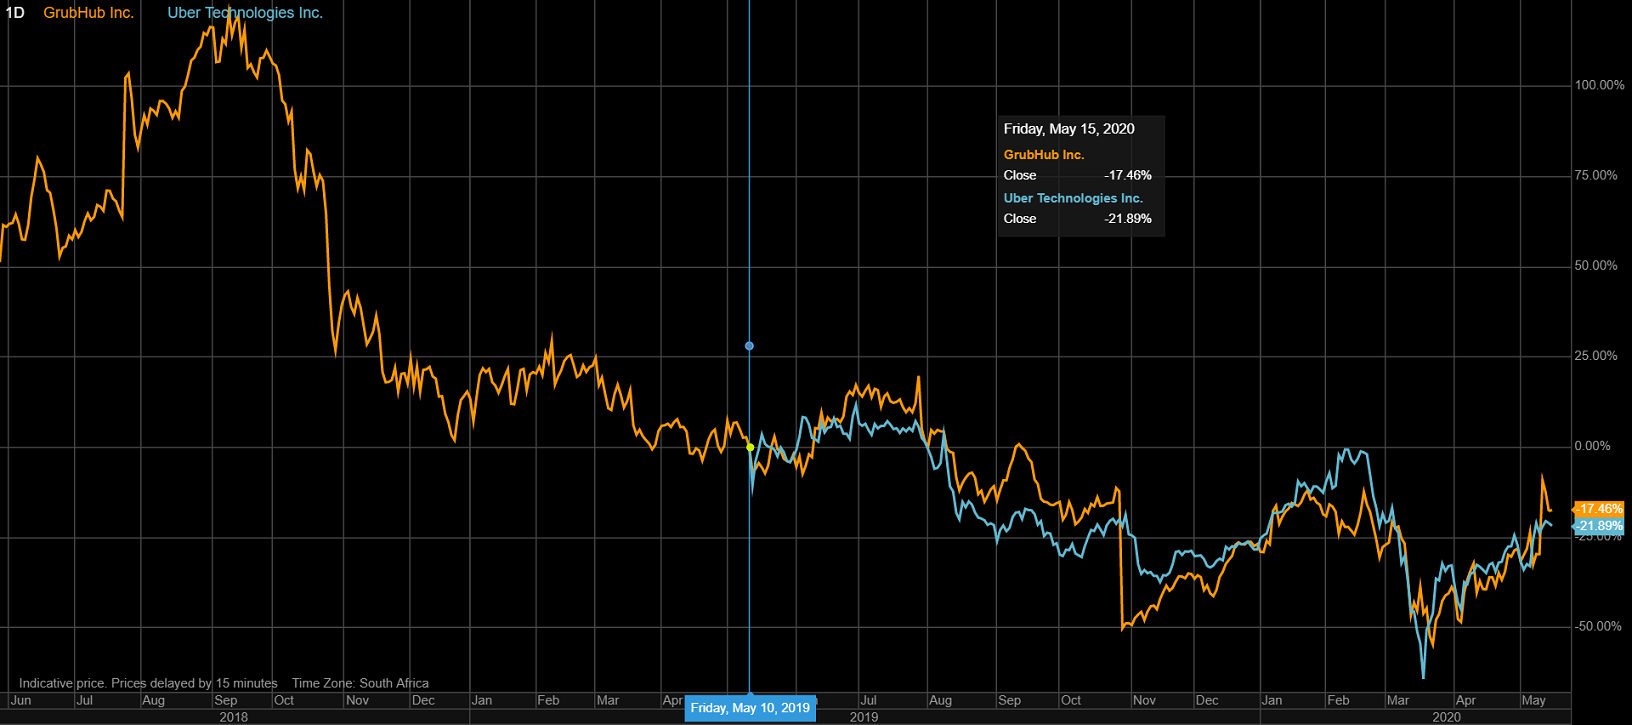 Uber (NYSE:UBER) stock performance vs GrubHub (NYSE: GRUB) stock price performance since Uber's listing date